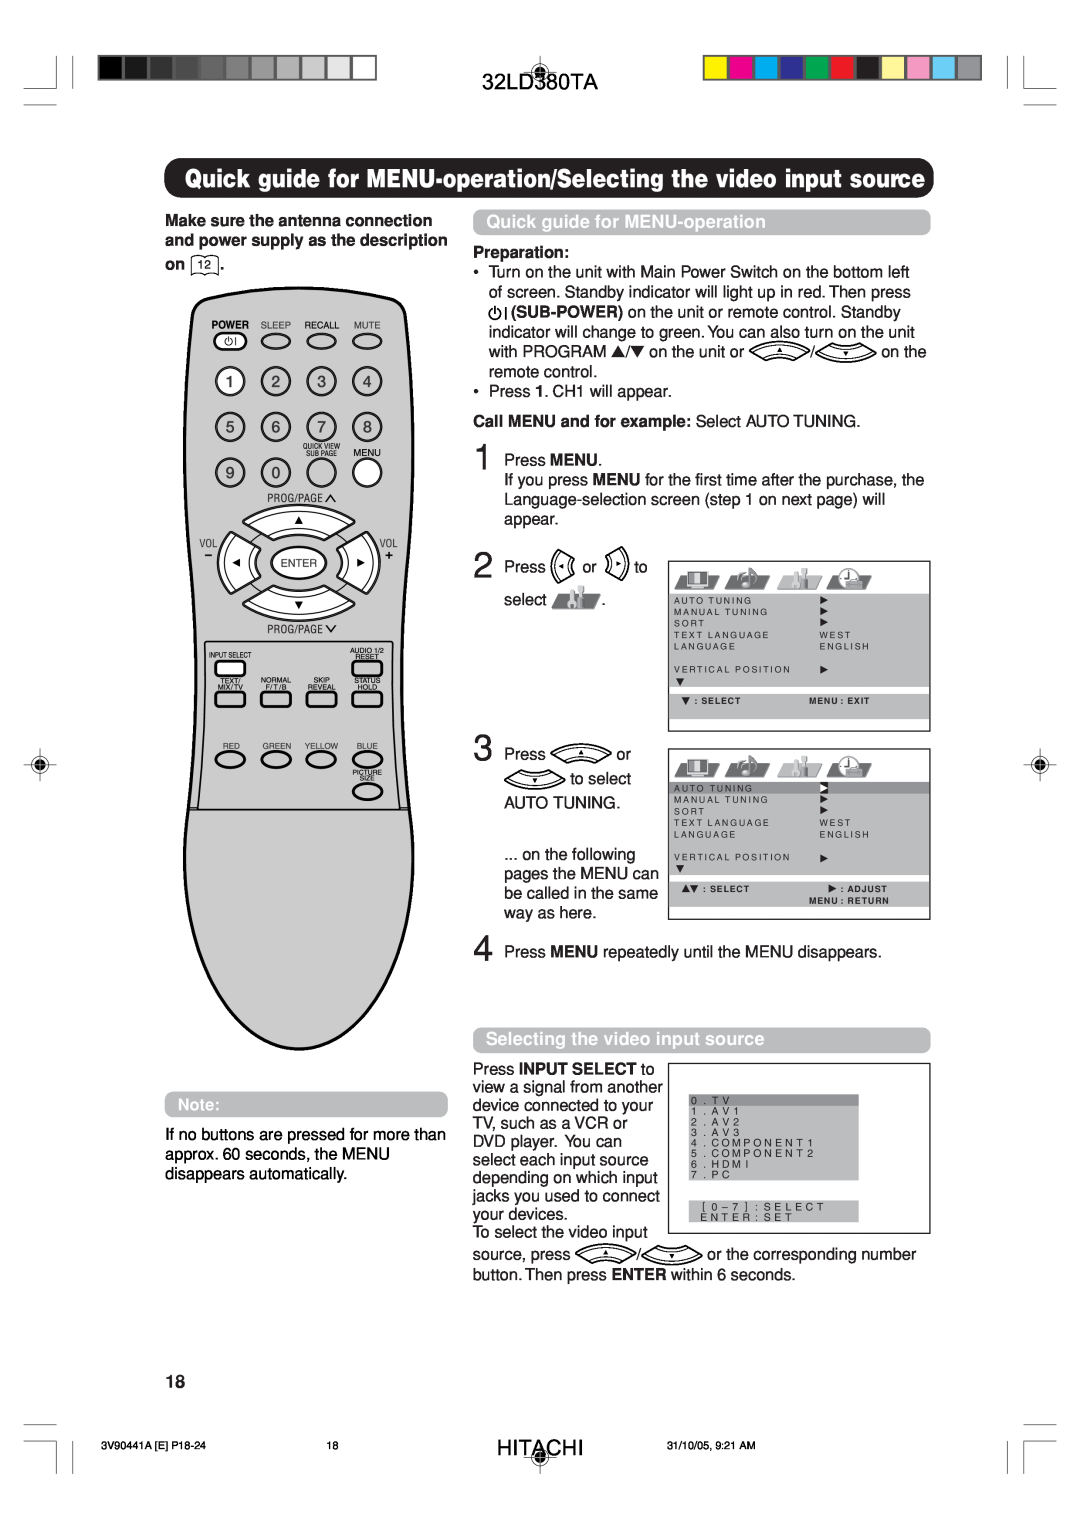 Hitachi 32LD380TA user manual Quick guide for MENU-operation/Selecting the video input source, Preparation, Hitachi 